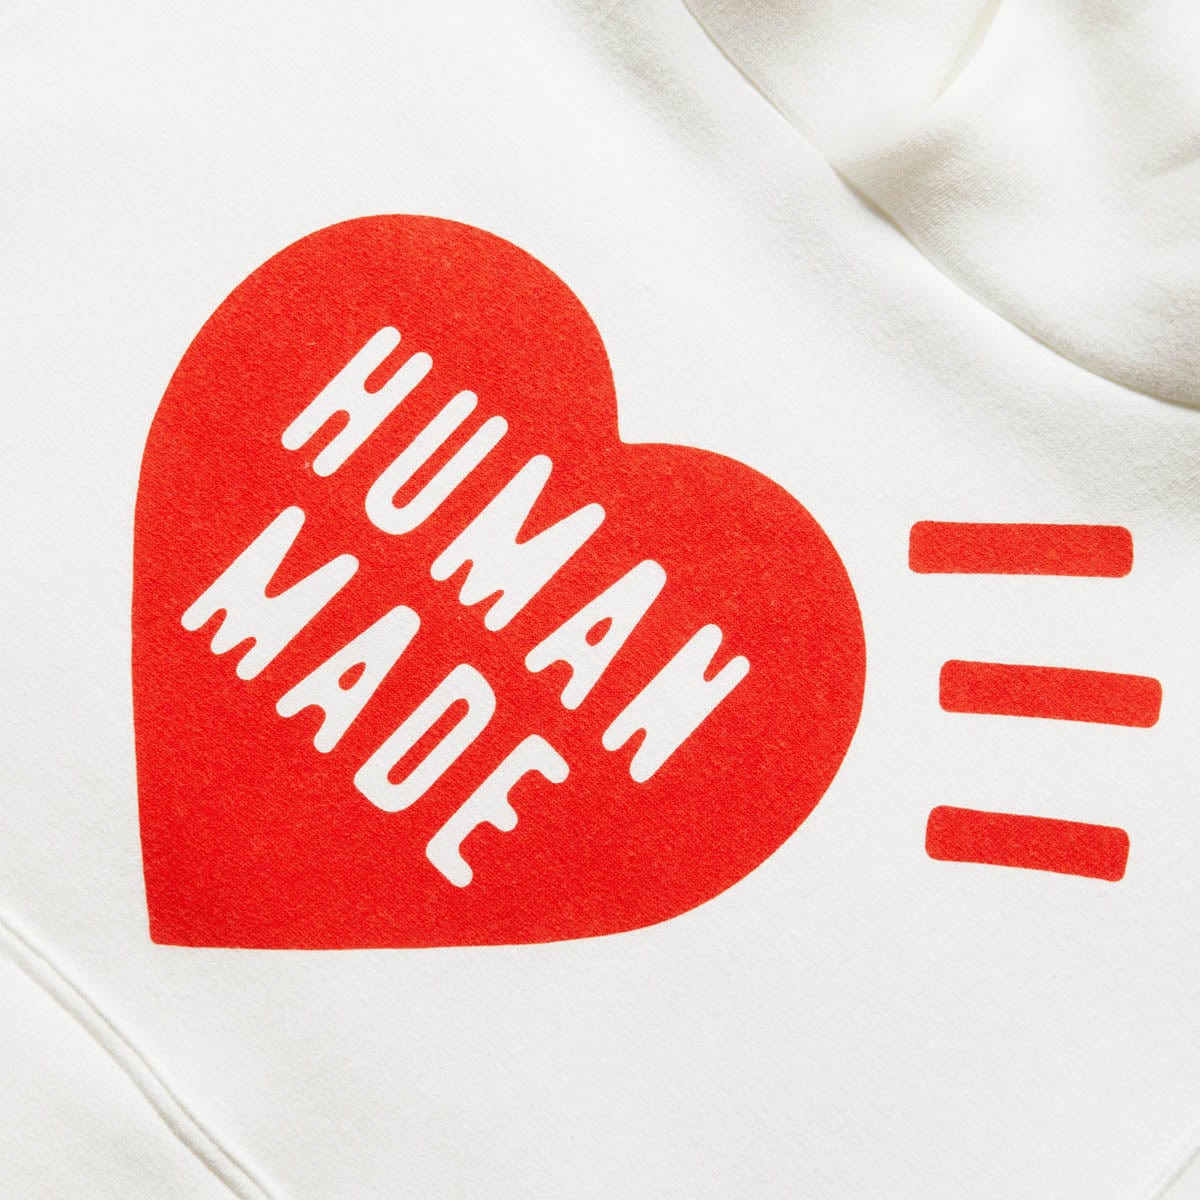 human made heart